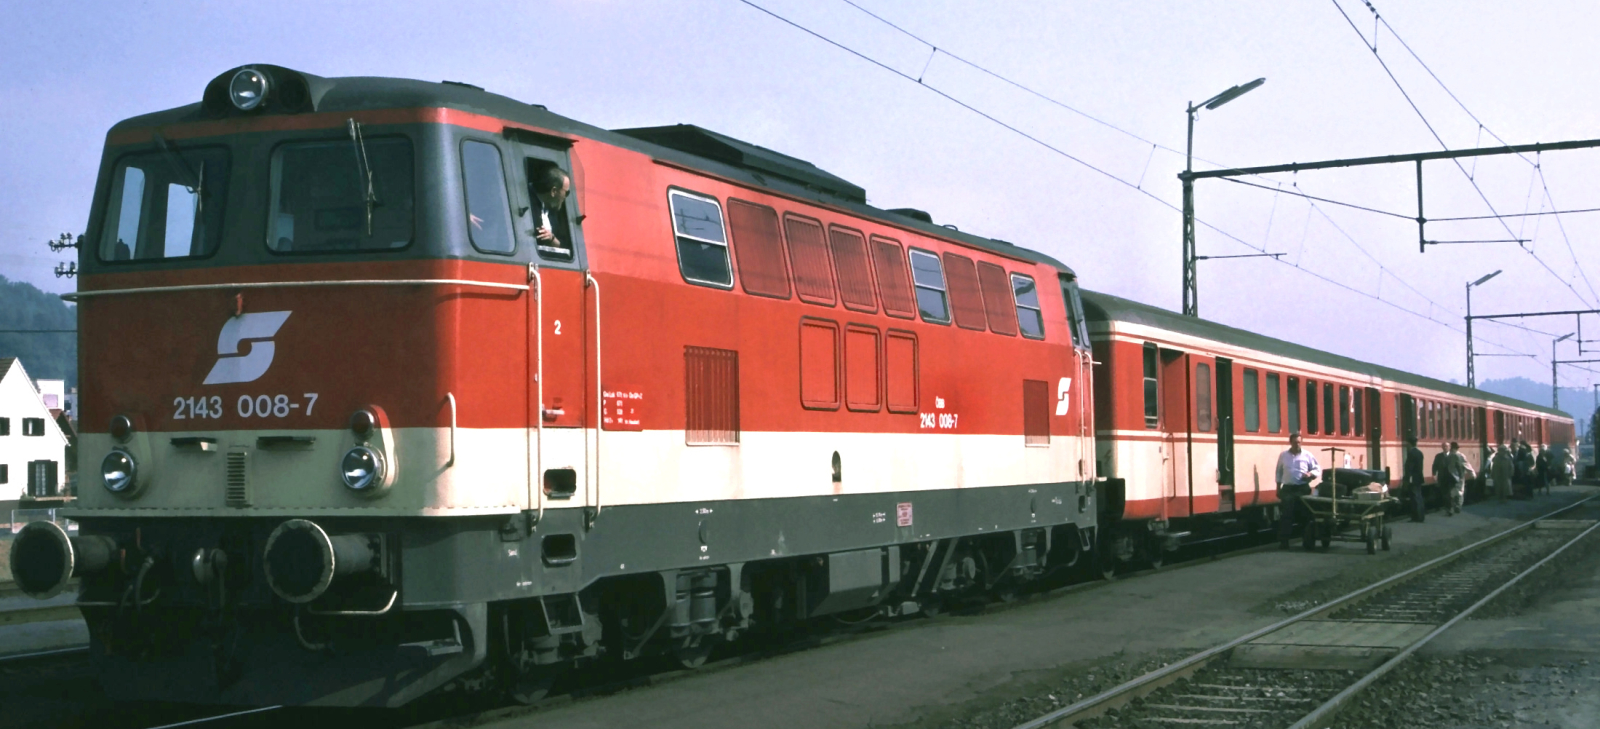 2143 008 in October 1988 in Feldbach, Styria